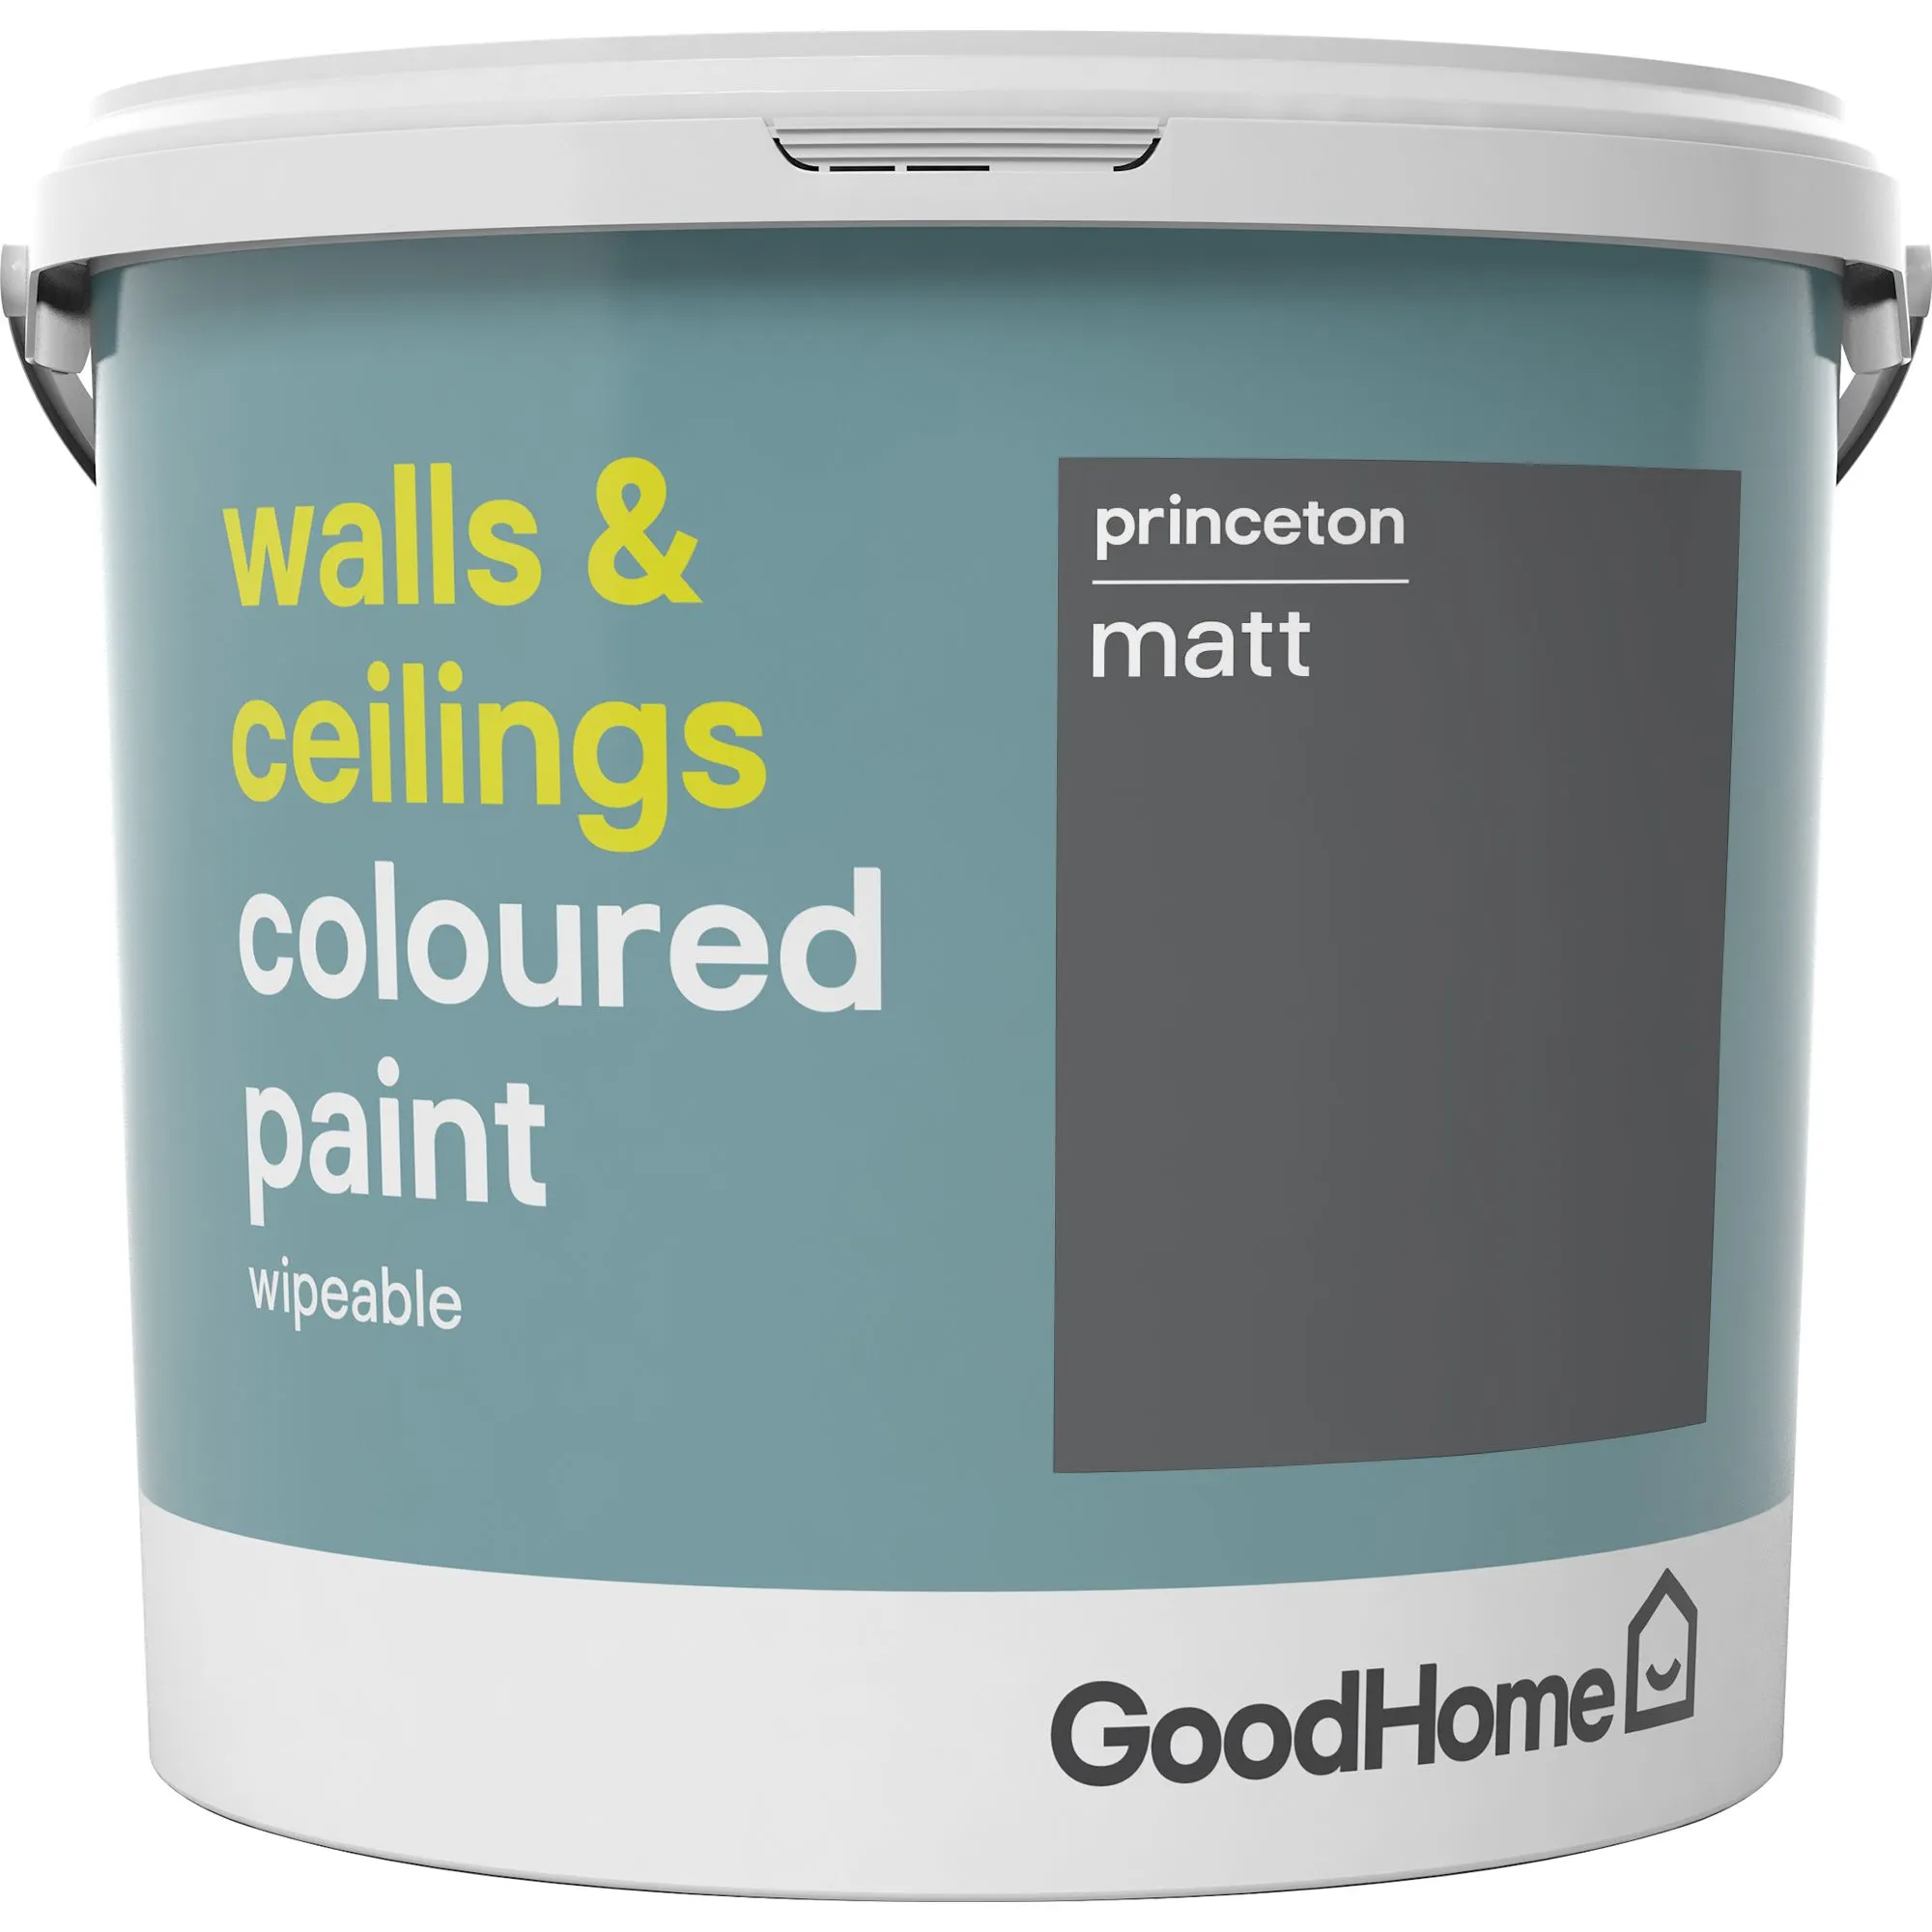 GoodHome Walls & ceilings Princeton Matt Emulsion paint, 5L